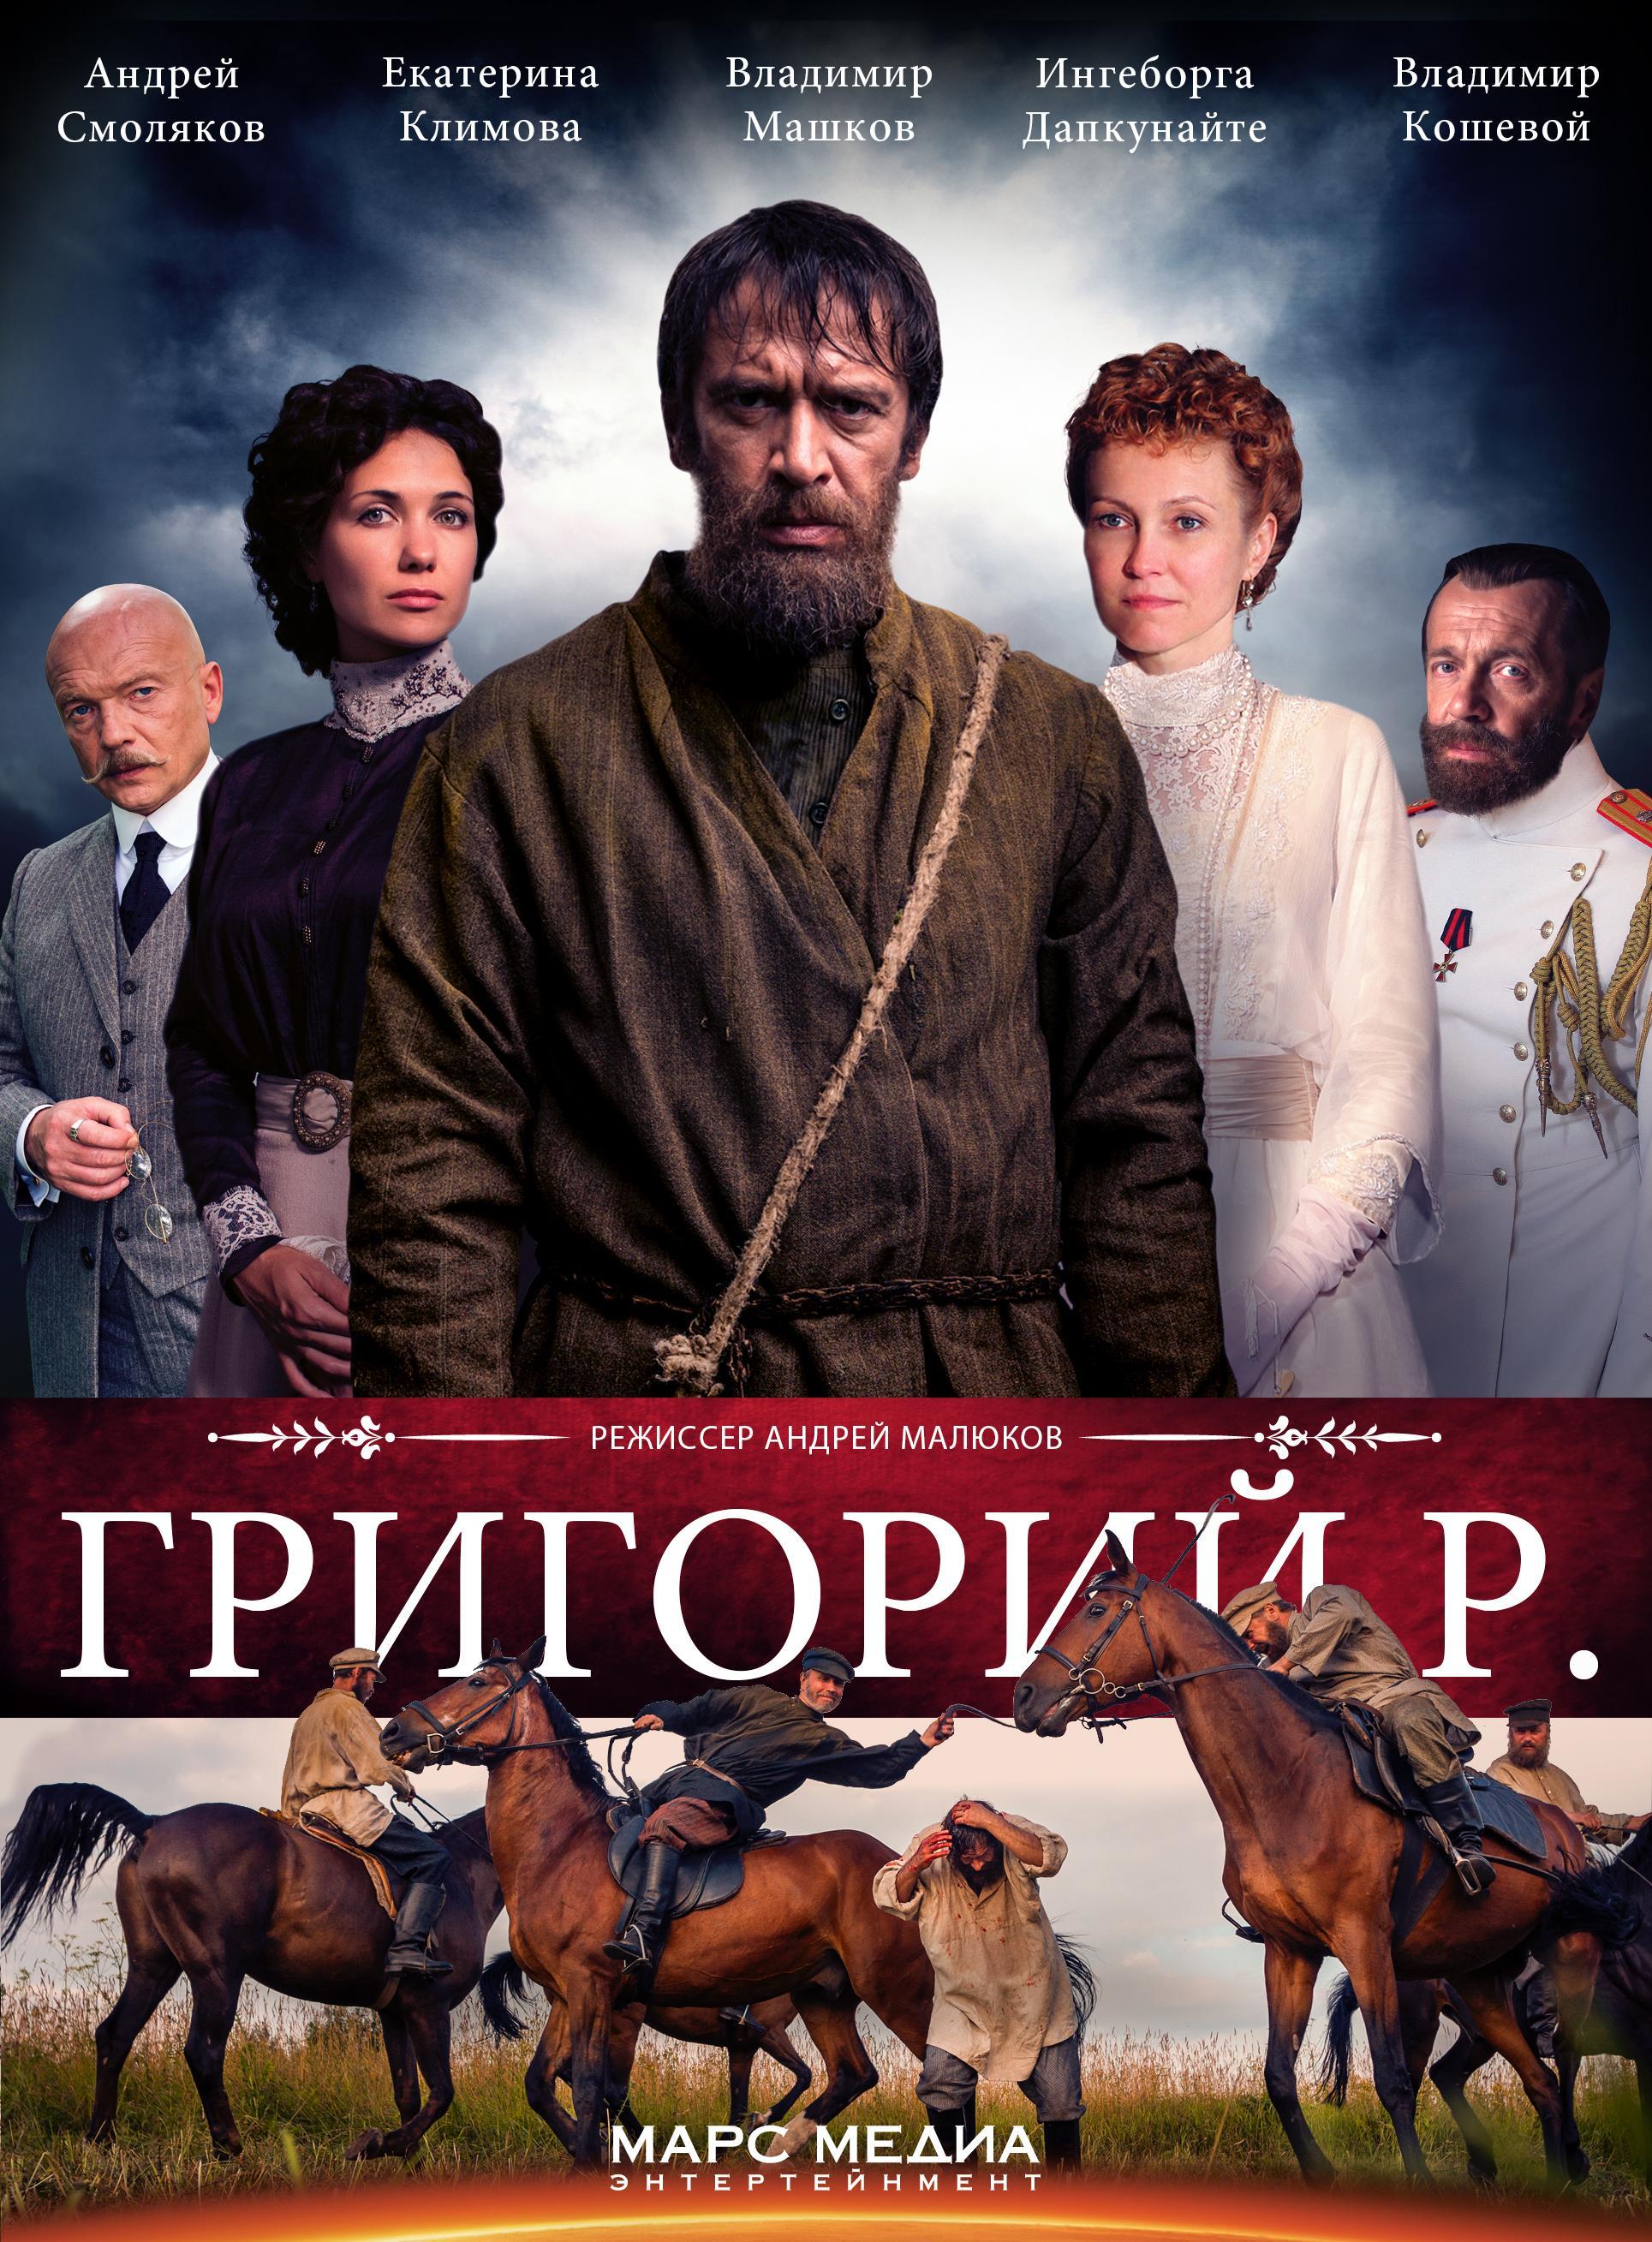 Постер фильма Григорий Р.